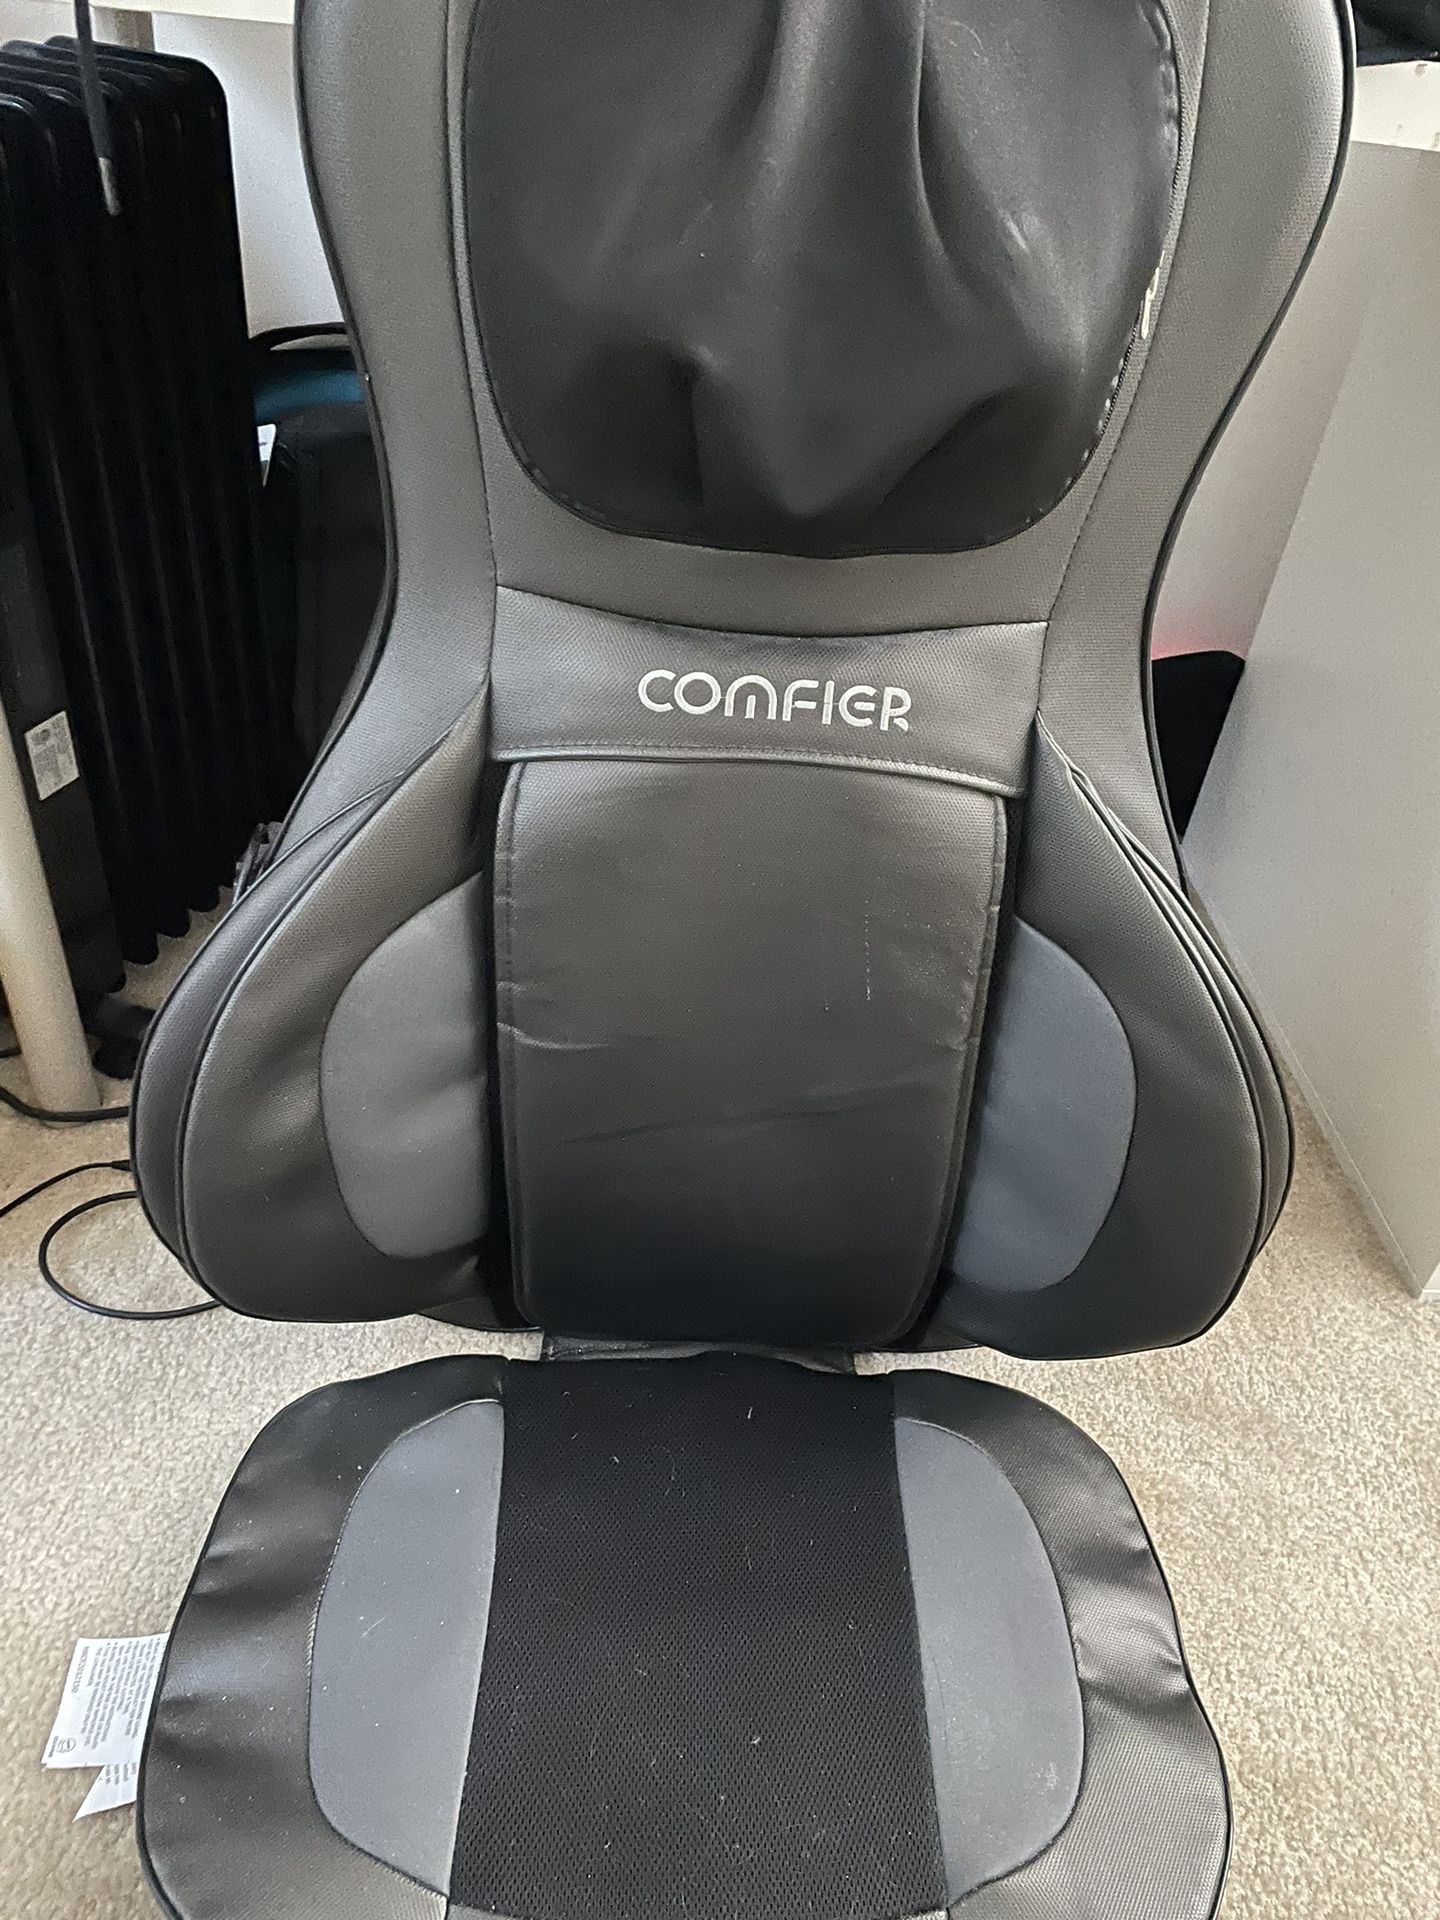 Confier Massage chair